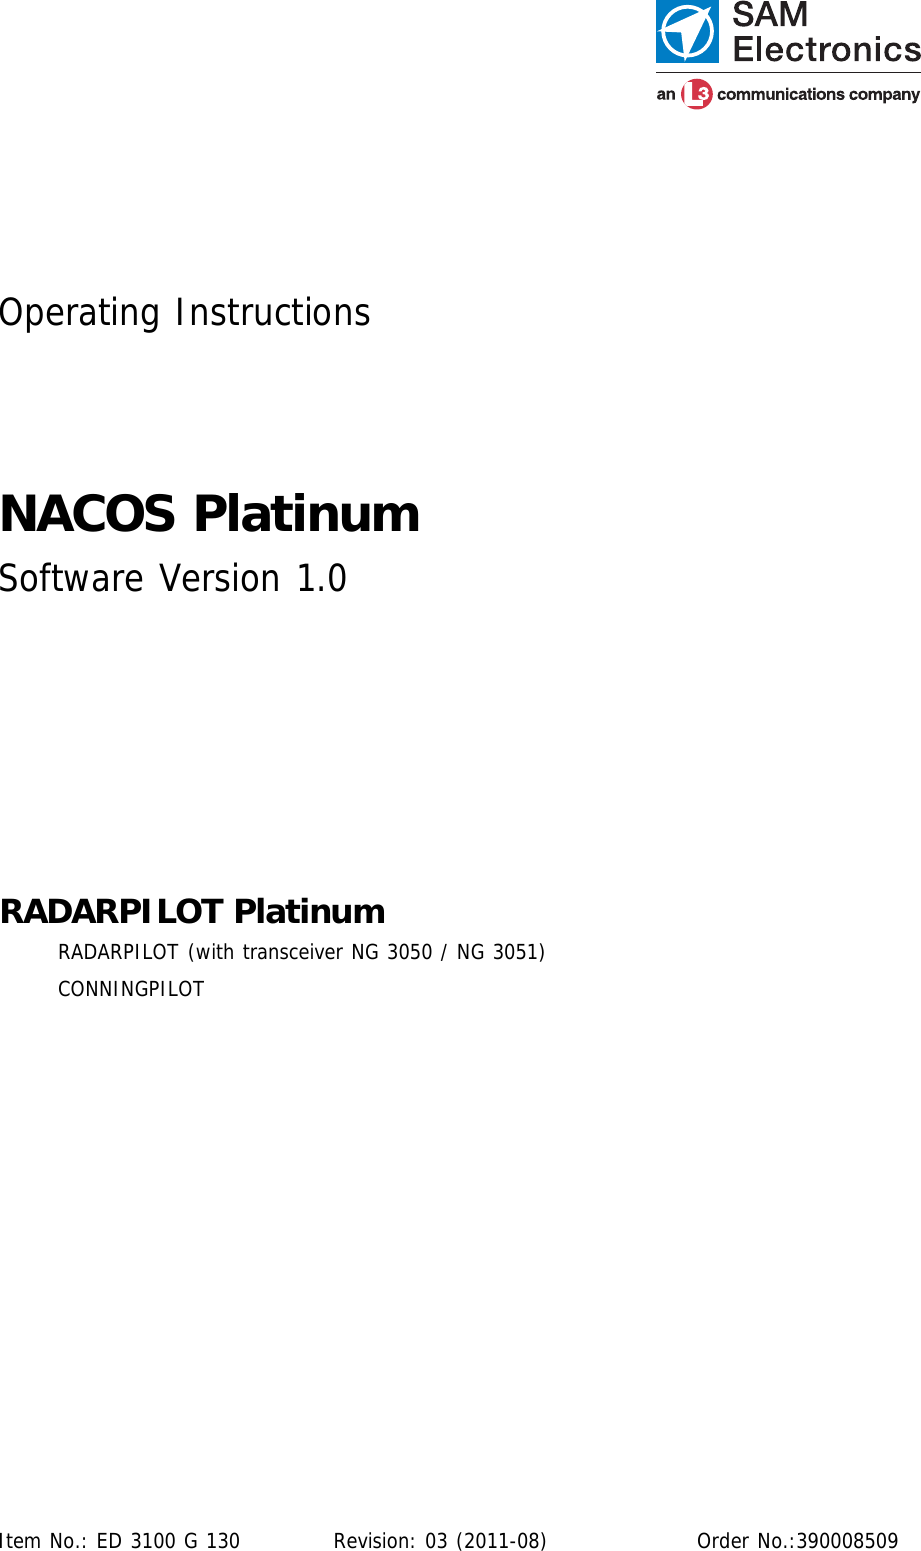 Operating InstructionsNACOS PlatinumSoftware Version 1.0RADARPILOT PlatinumRADARPILOT (with transceiver NG 3050 / NG 3051)CONNINGPILOTItem No.: ED 3100 G 130 Revision: 03 (2011-08) Order No.:390008509